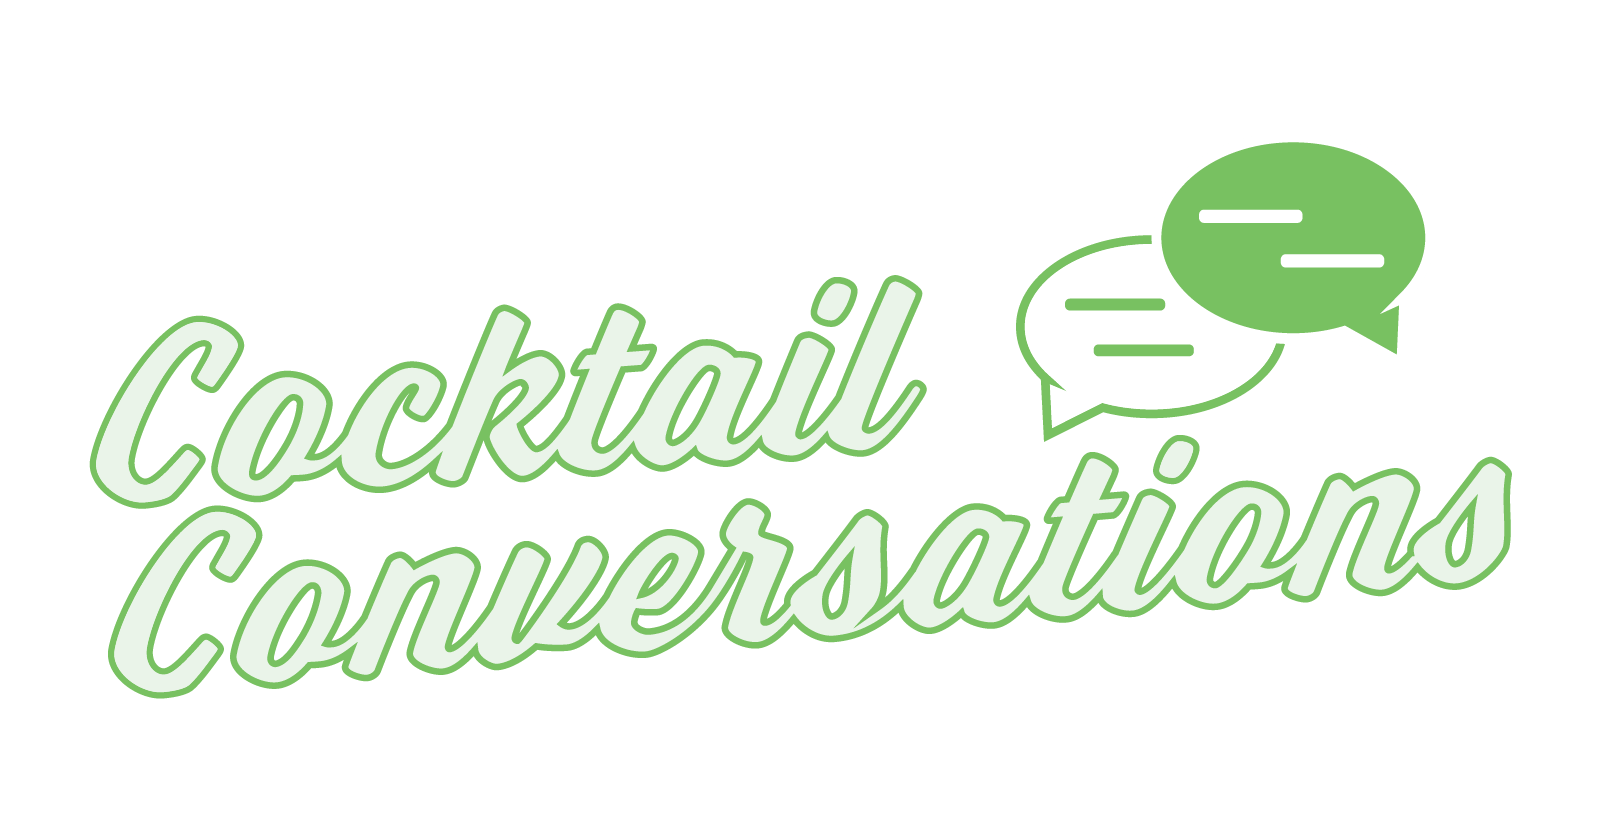 Cocktail Conversations - Event Summary